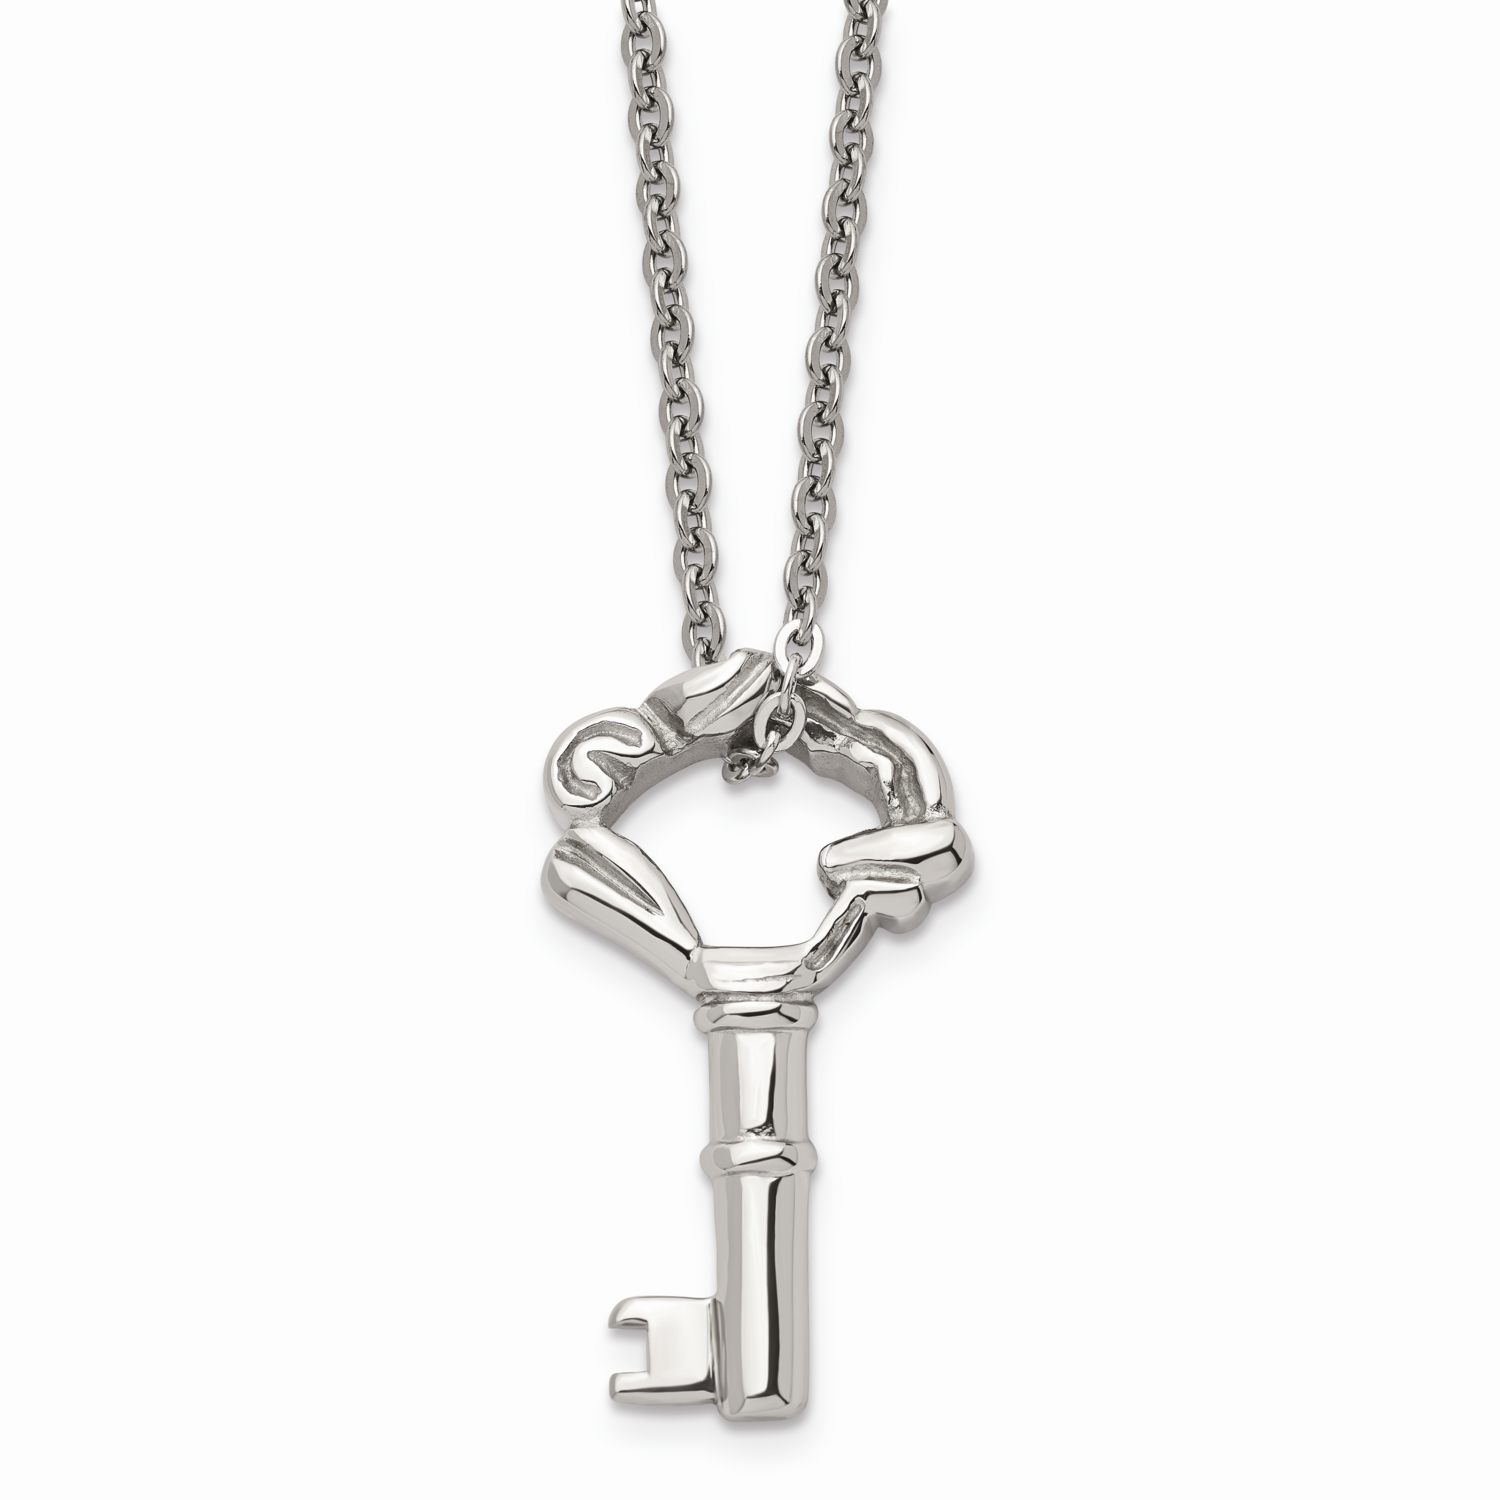 Fancy Key Pendant Necklace Stainless Steel Polished SRN1354-18